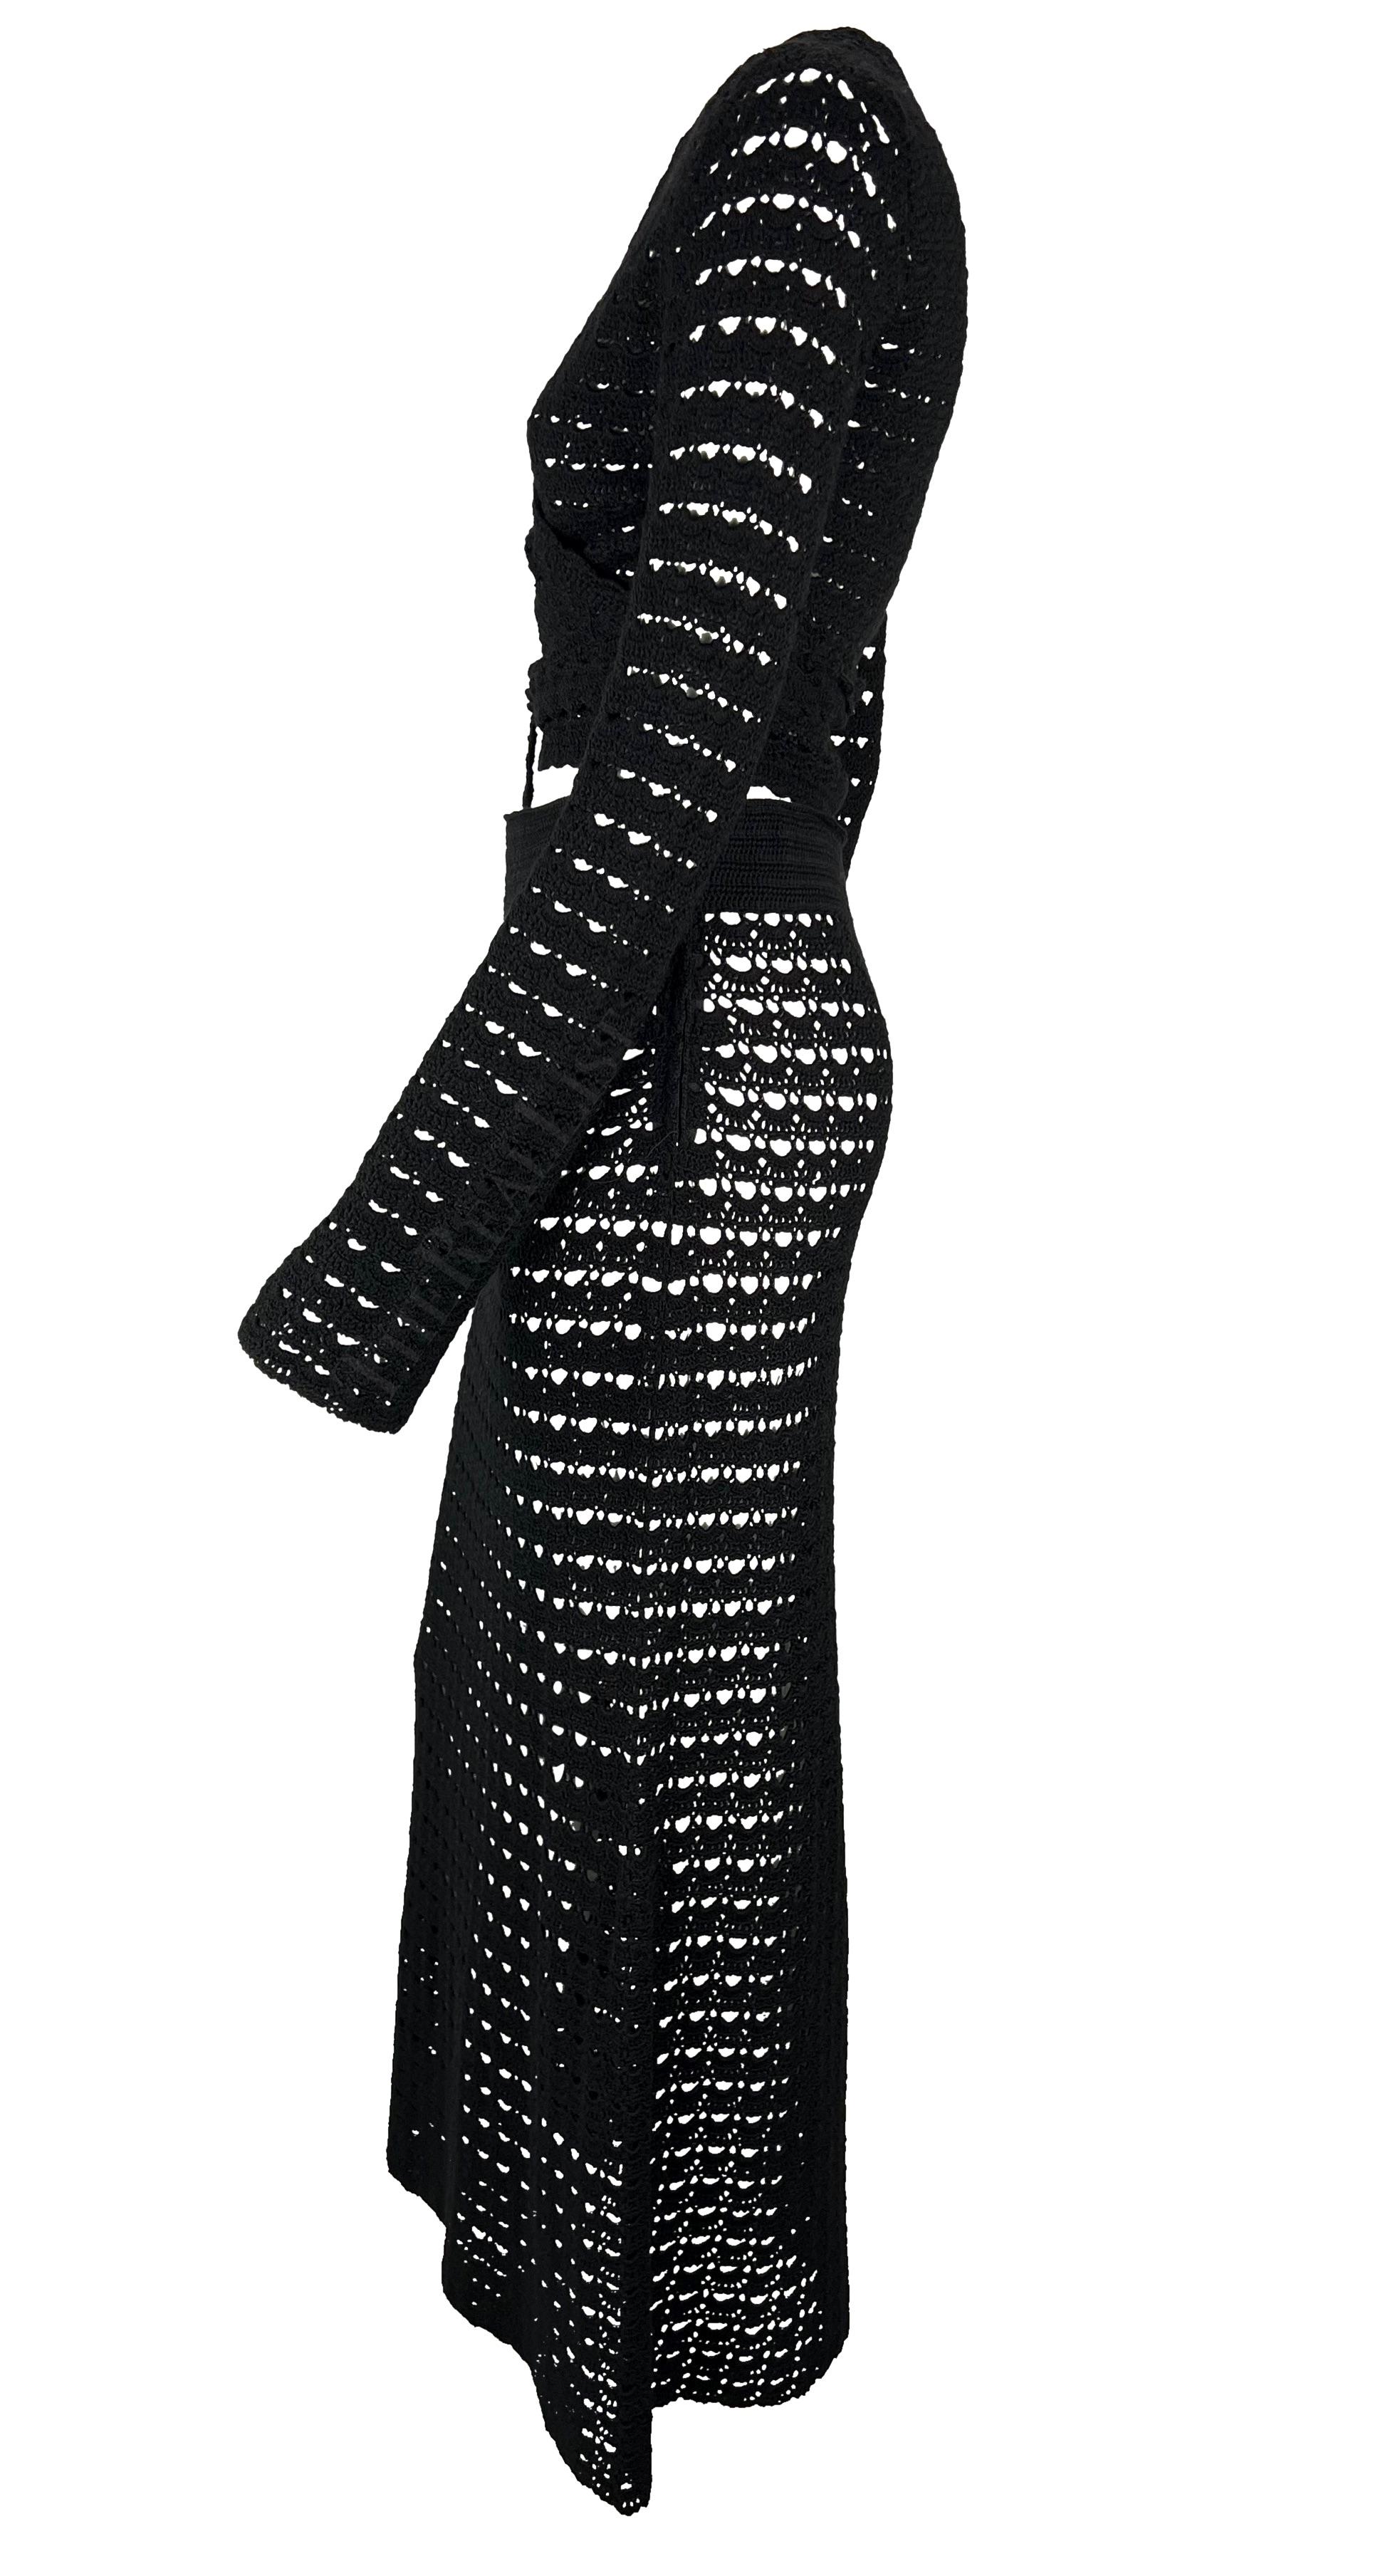 S/S 1997 Dolce & Gabbana Black Knit Crochet Maxi Skirt Wrap Top Skirt Set For Sale 2